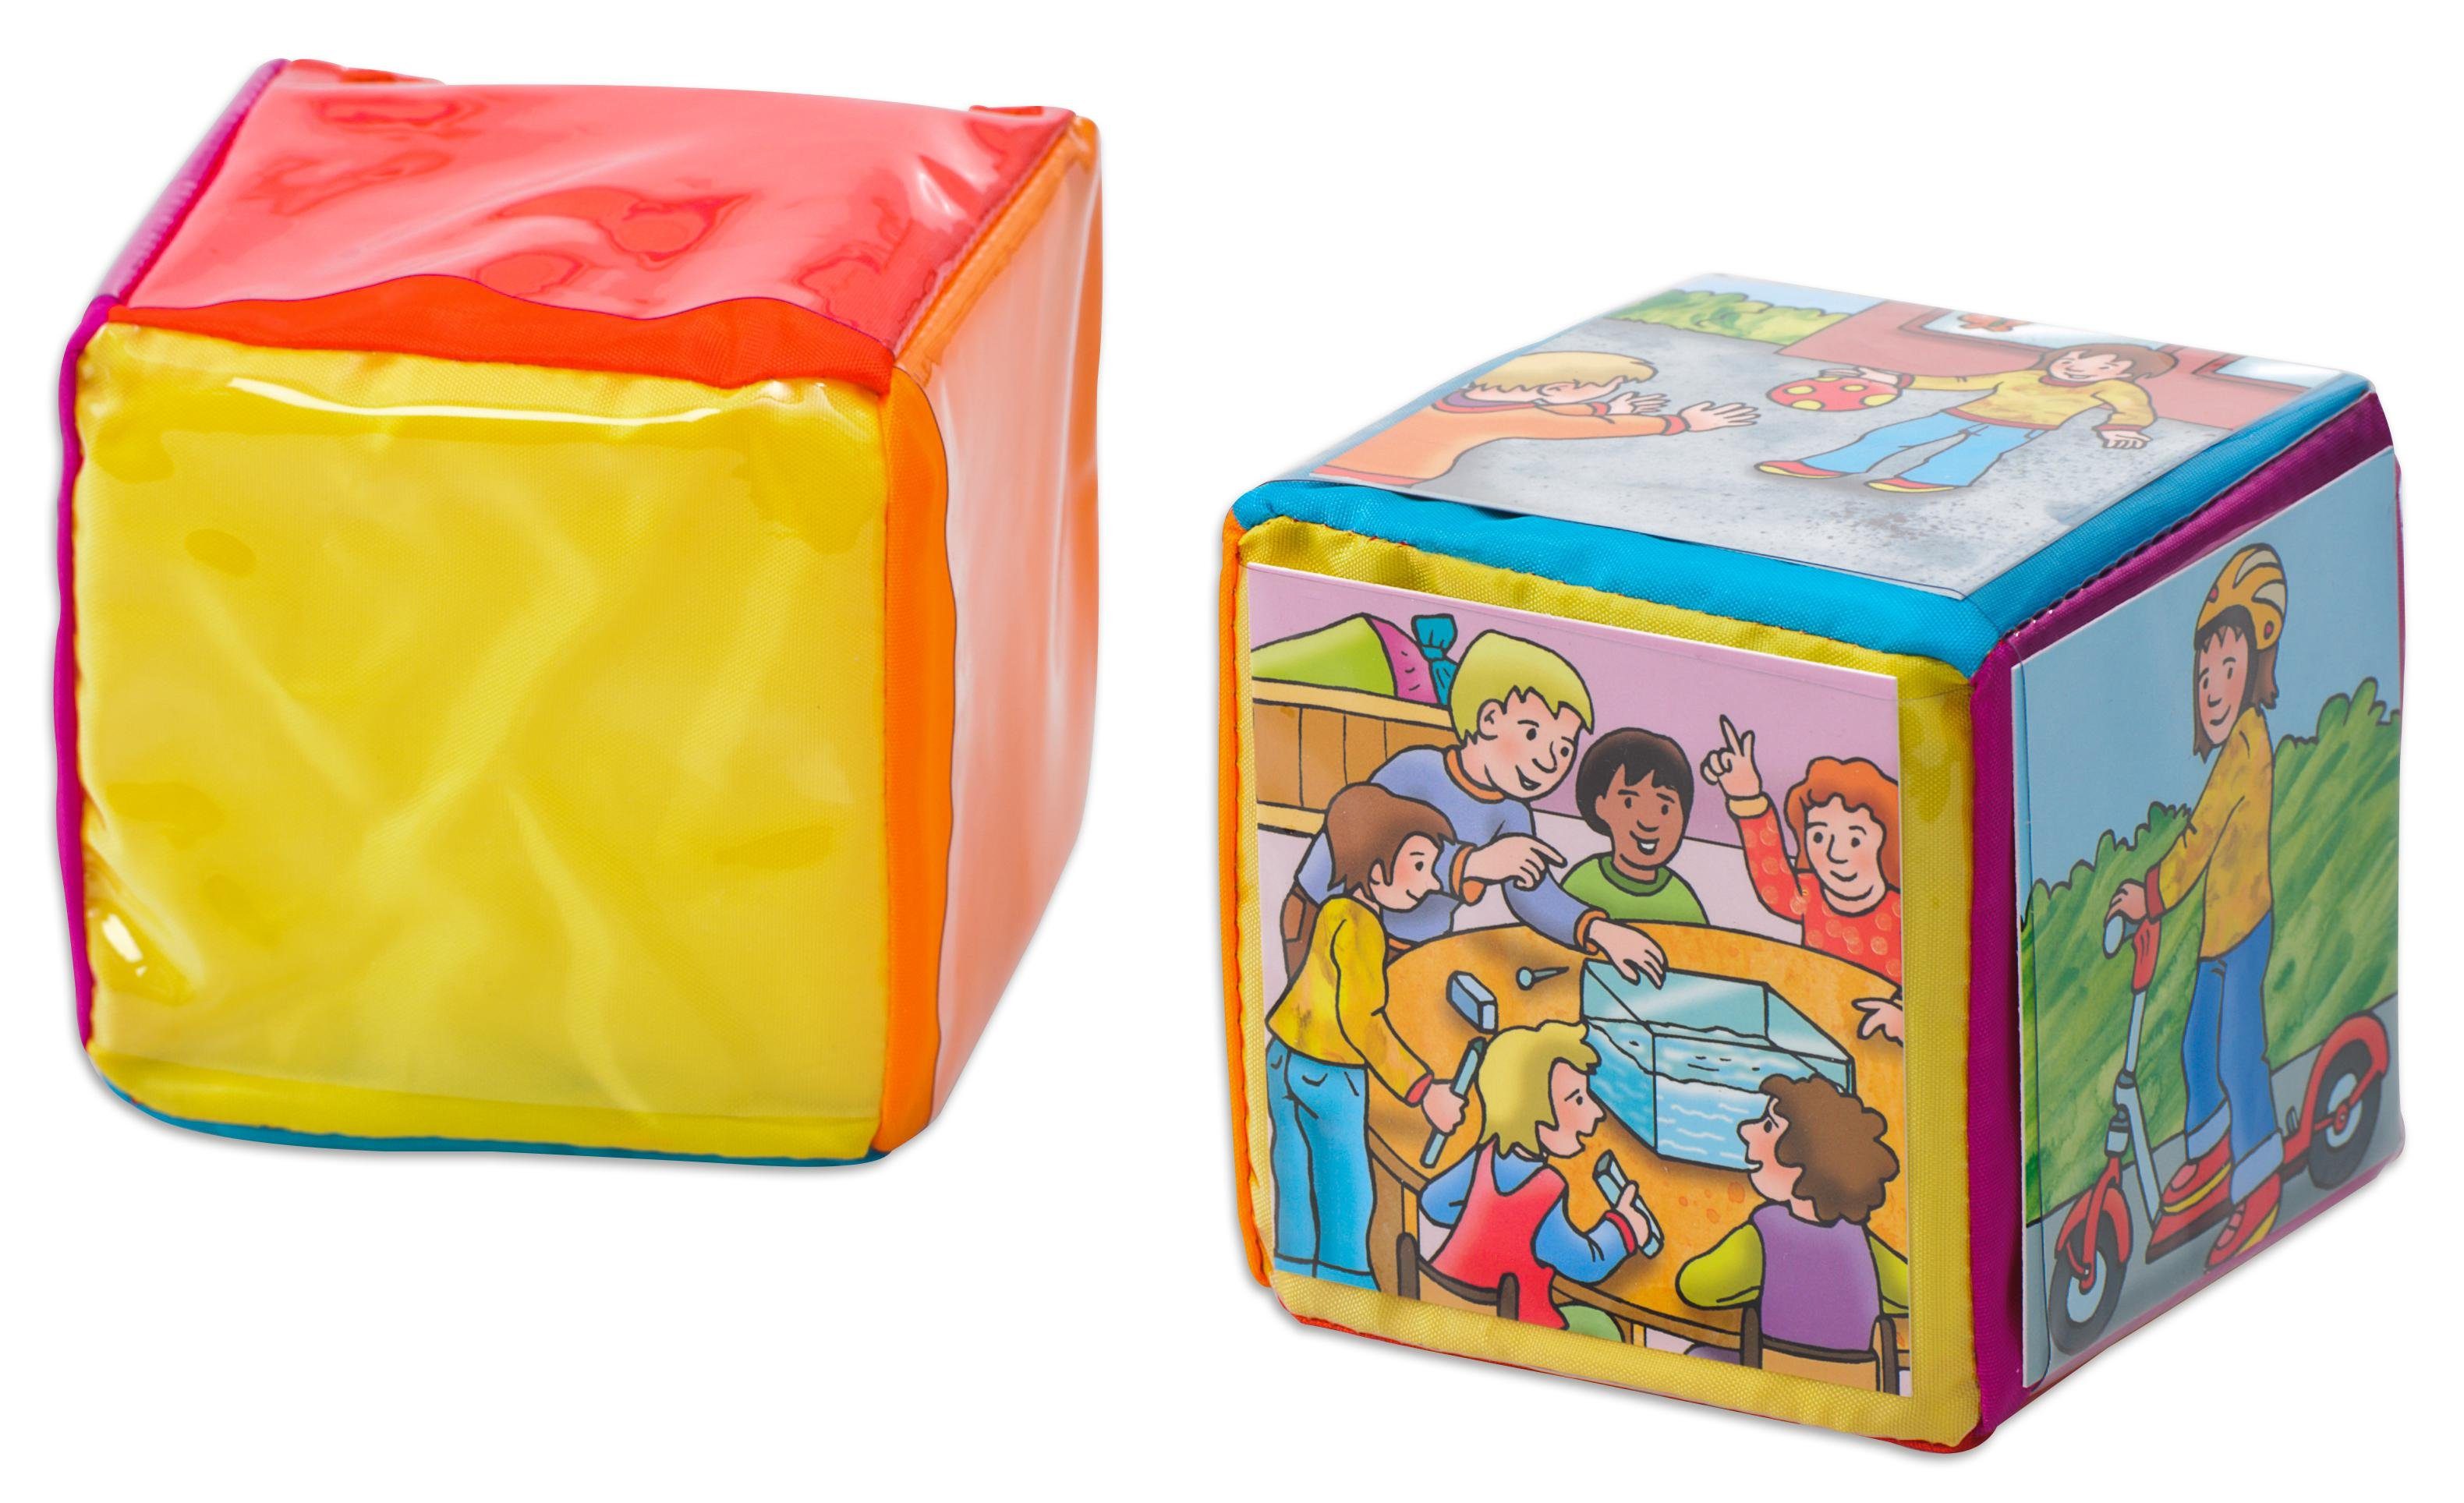 Betzold Lernspielzeug Schaumstoff-Würfel 3 Augenwürfel rot blau gelb -  Kinder Soft-Würfel